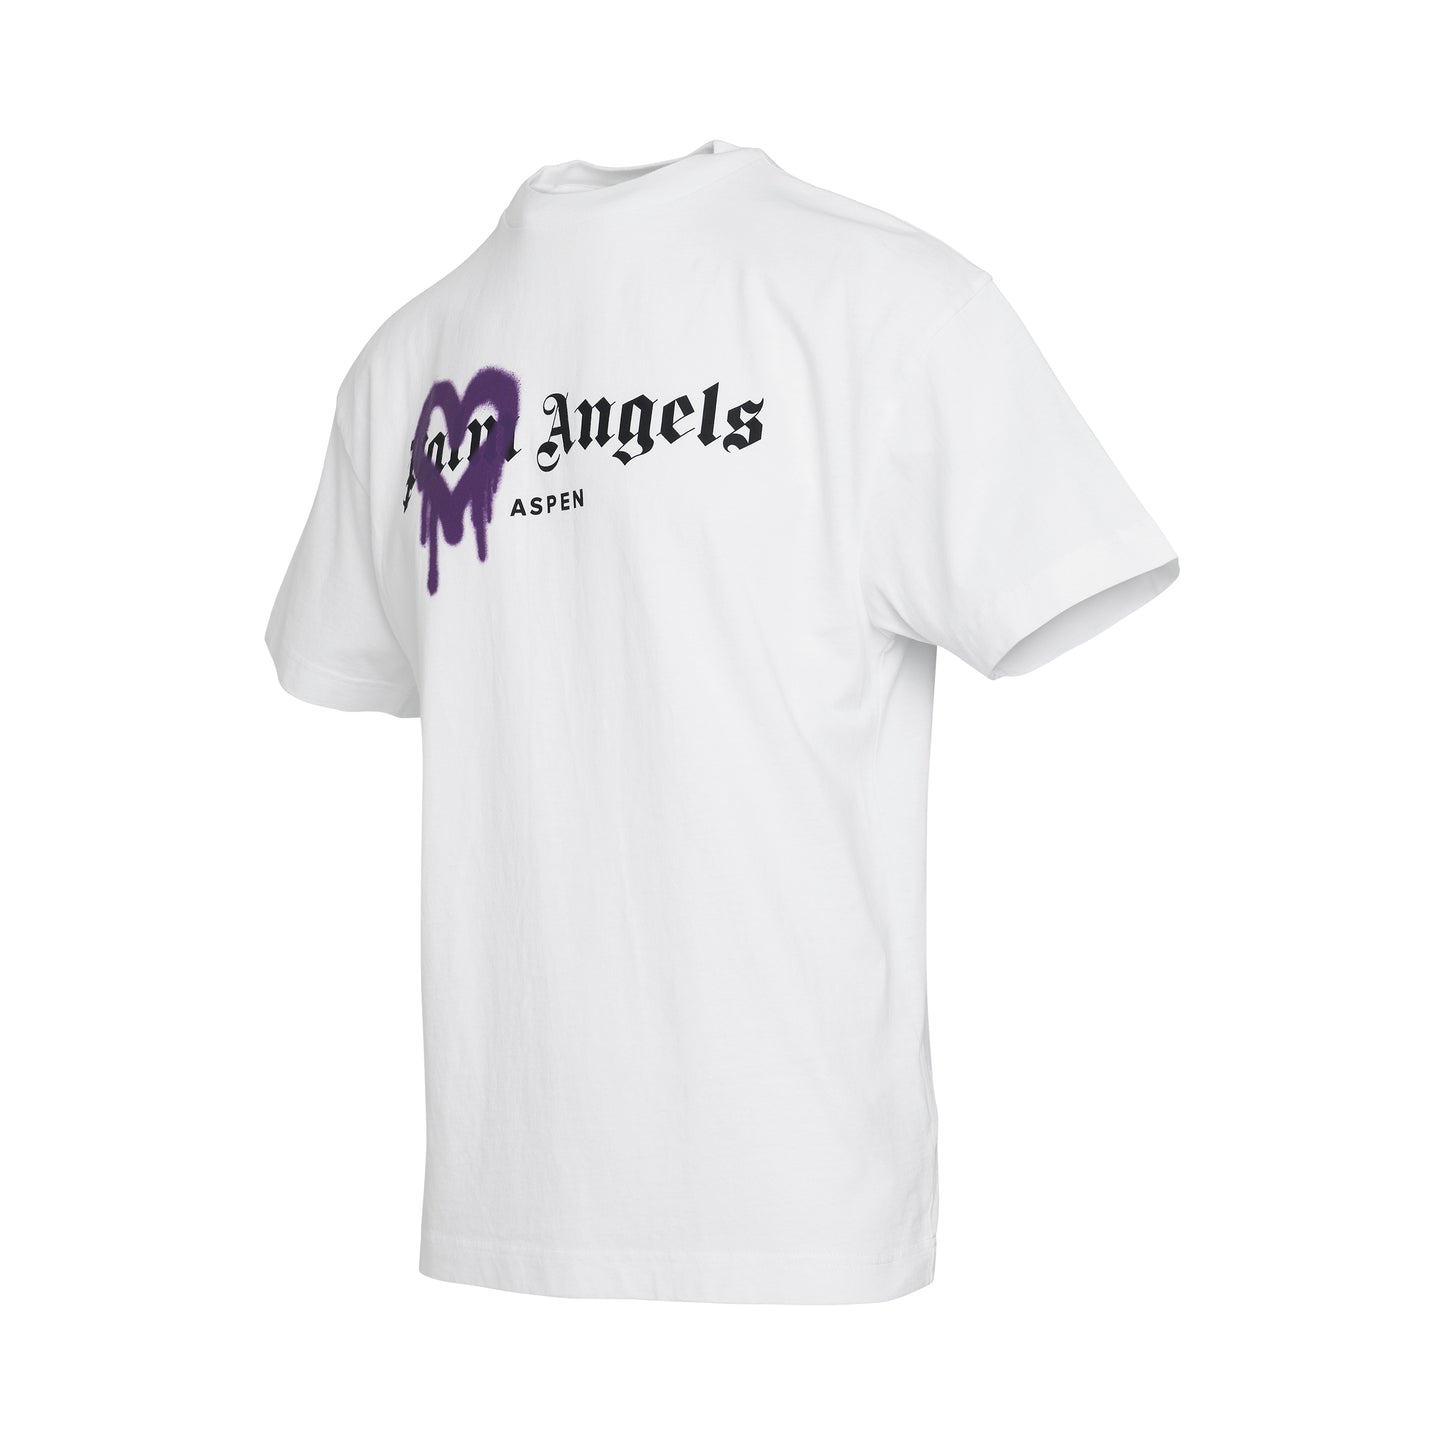 Aspen Heart Sprayed T-Shirt in White/Purple